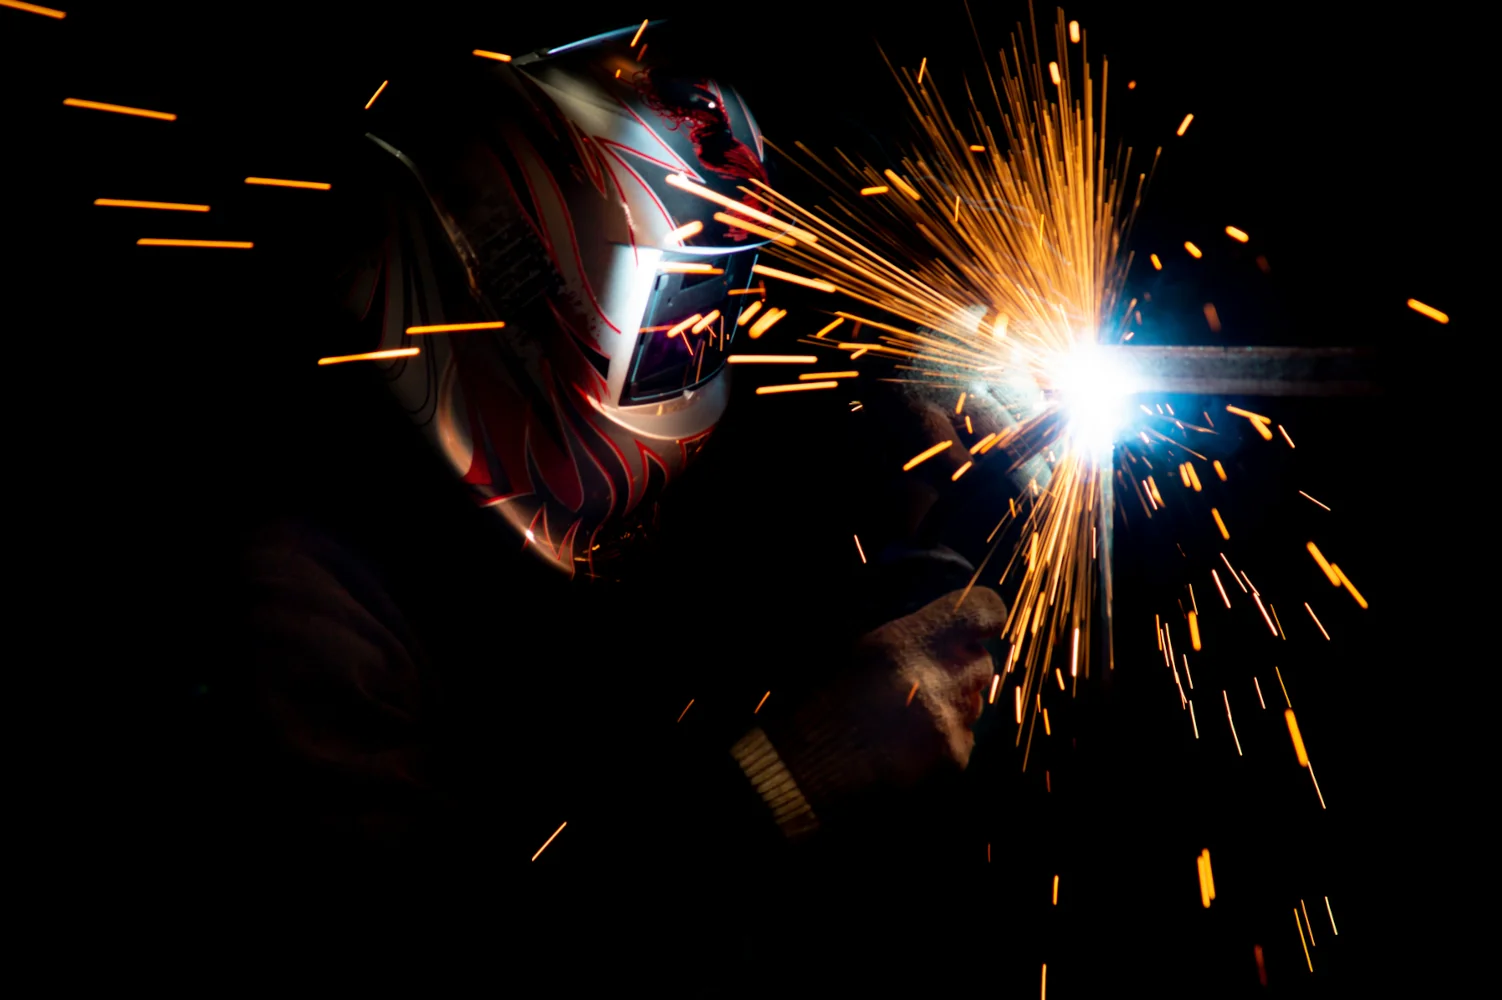 male welder mask performing metal welding photo dark colors sparks flying